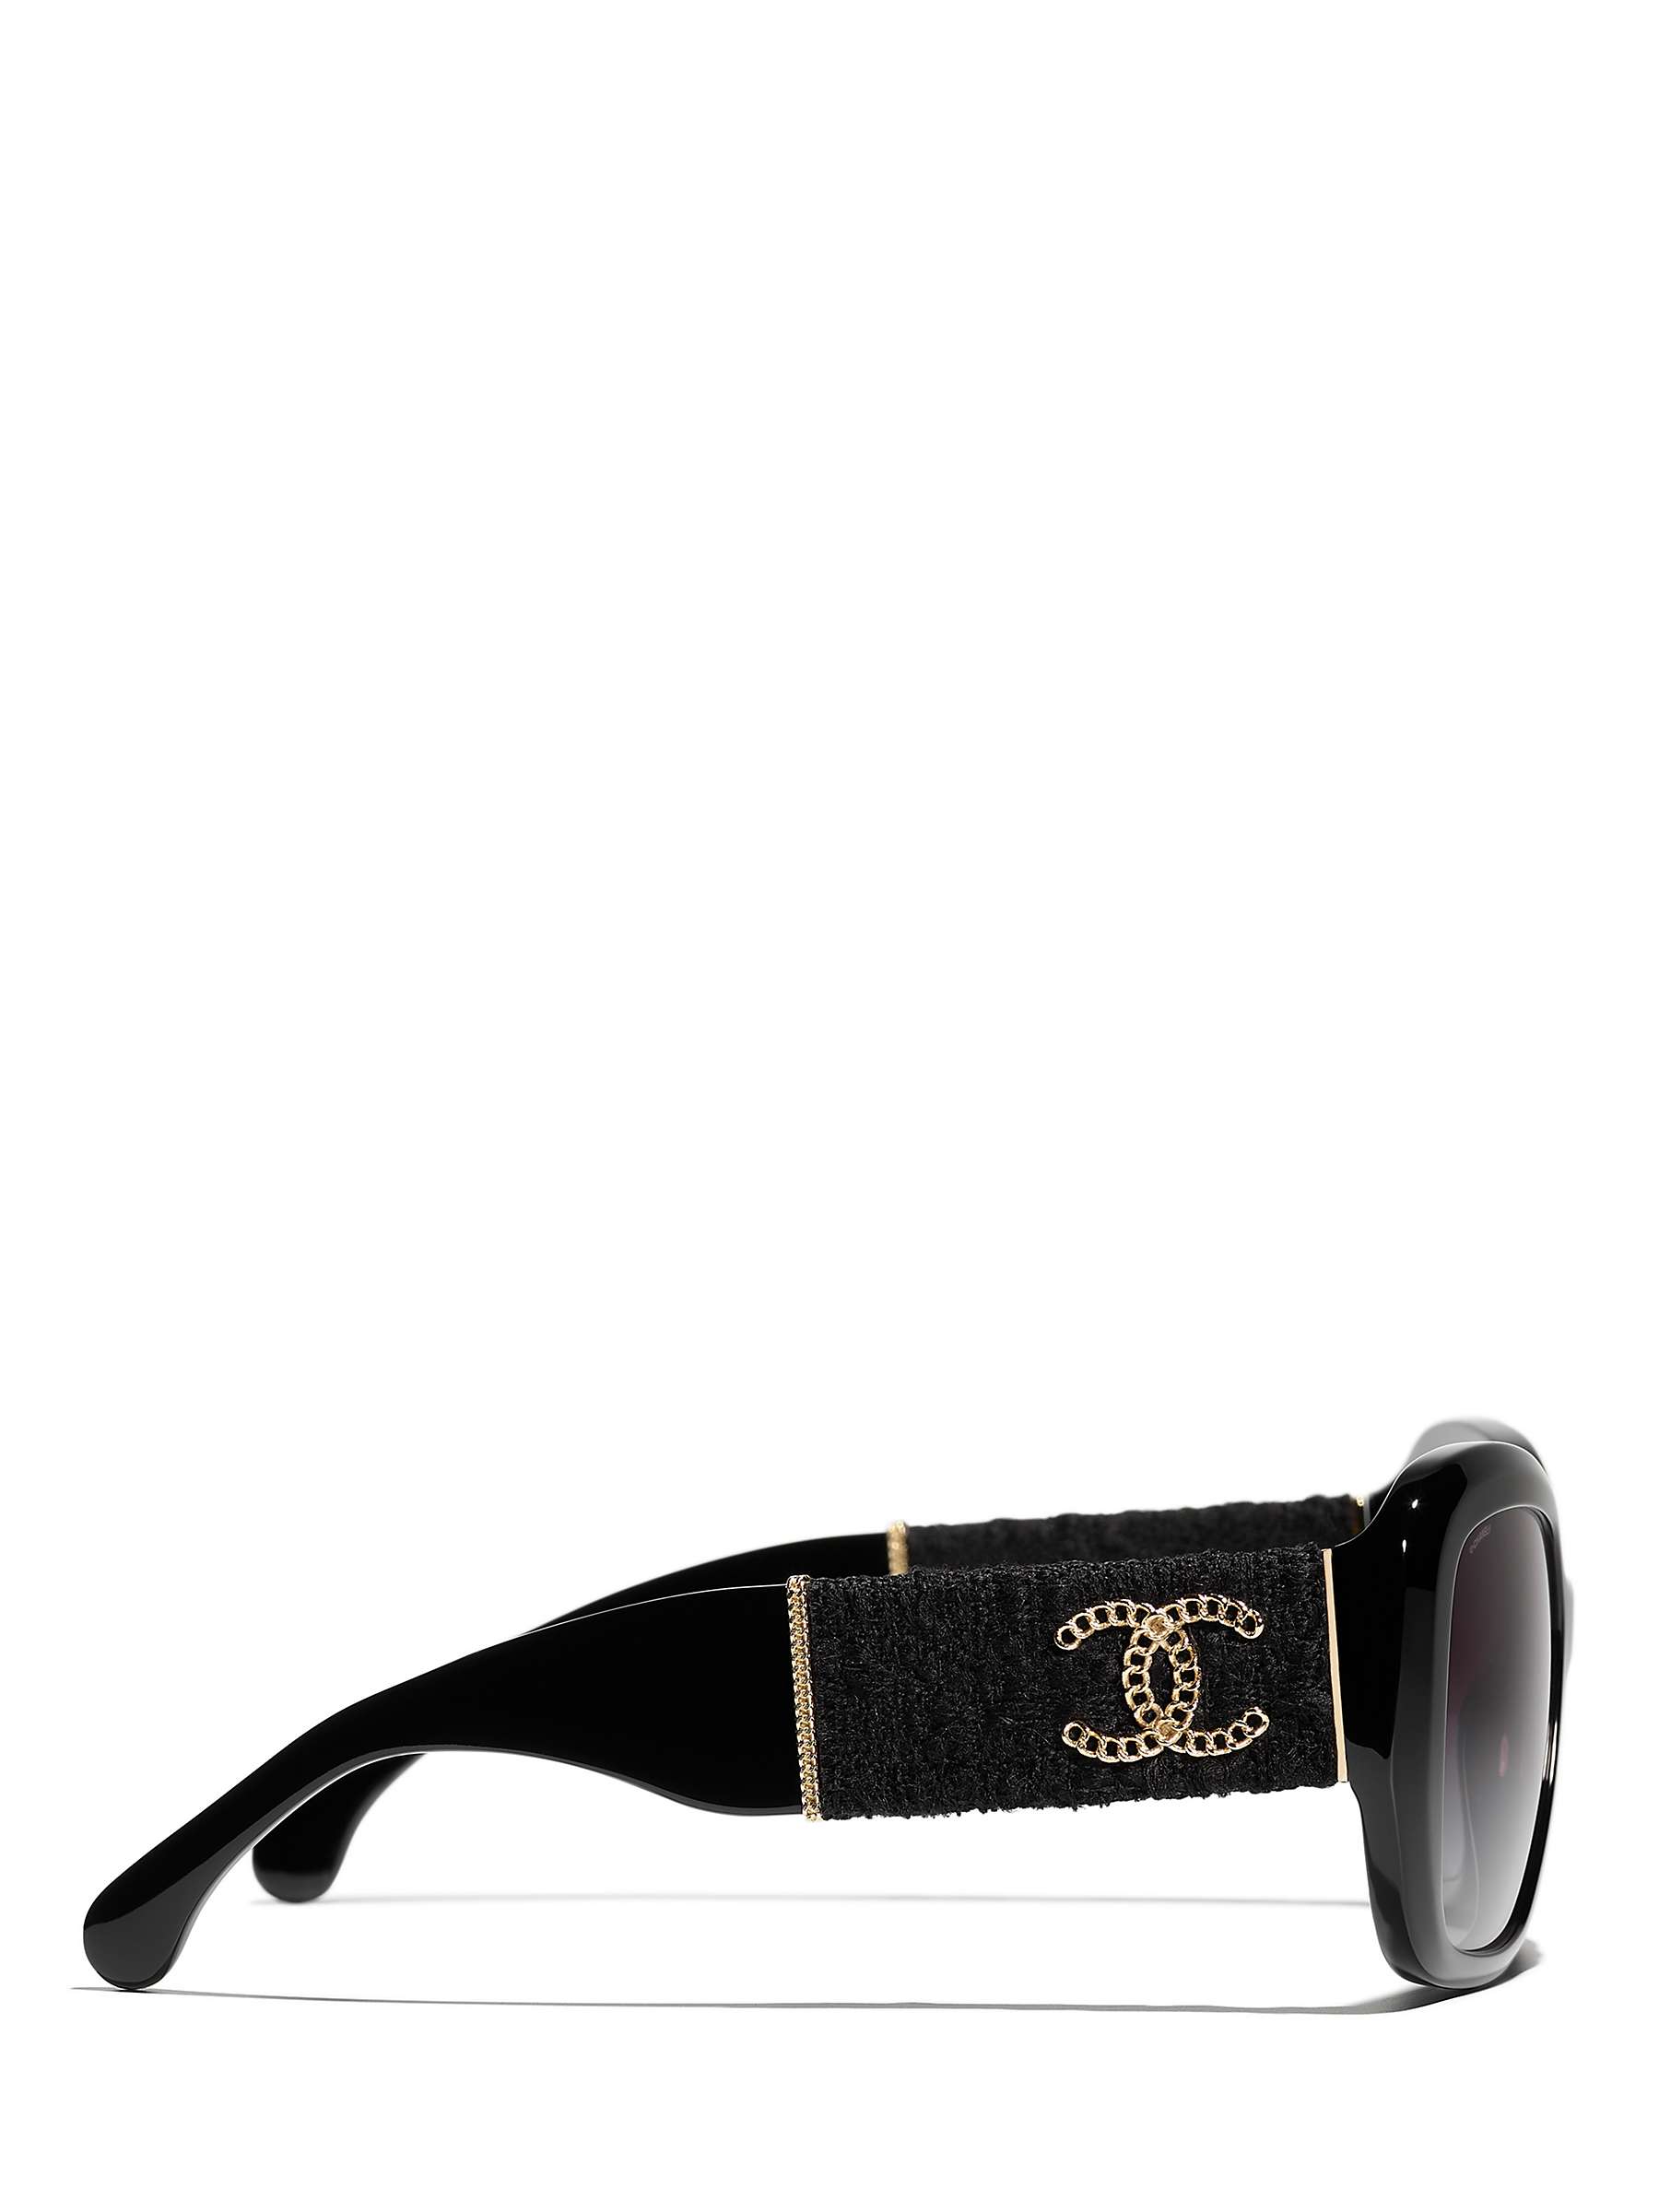 Buy CHANEL Square Sunglasses CH5512 Black/Lilac Gradient Online at johnlewis.com